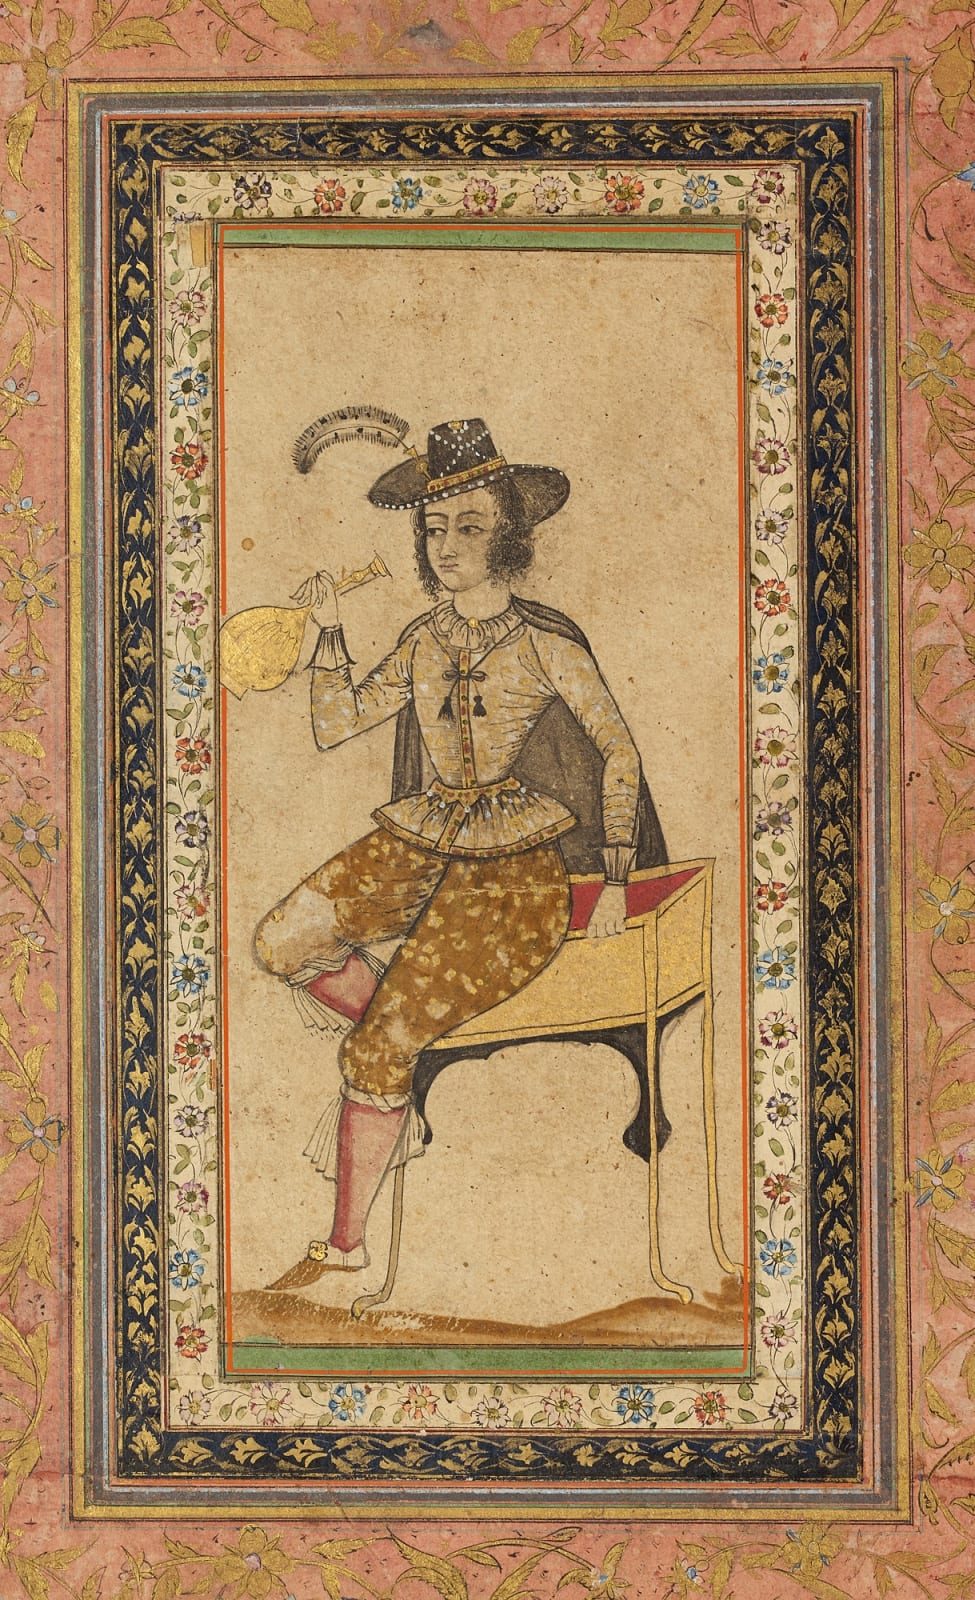 A European Dandy swigging Wine, Deccani, late 17th century